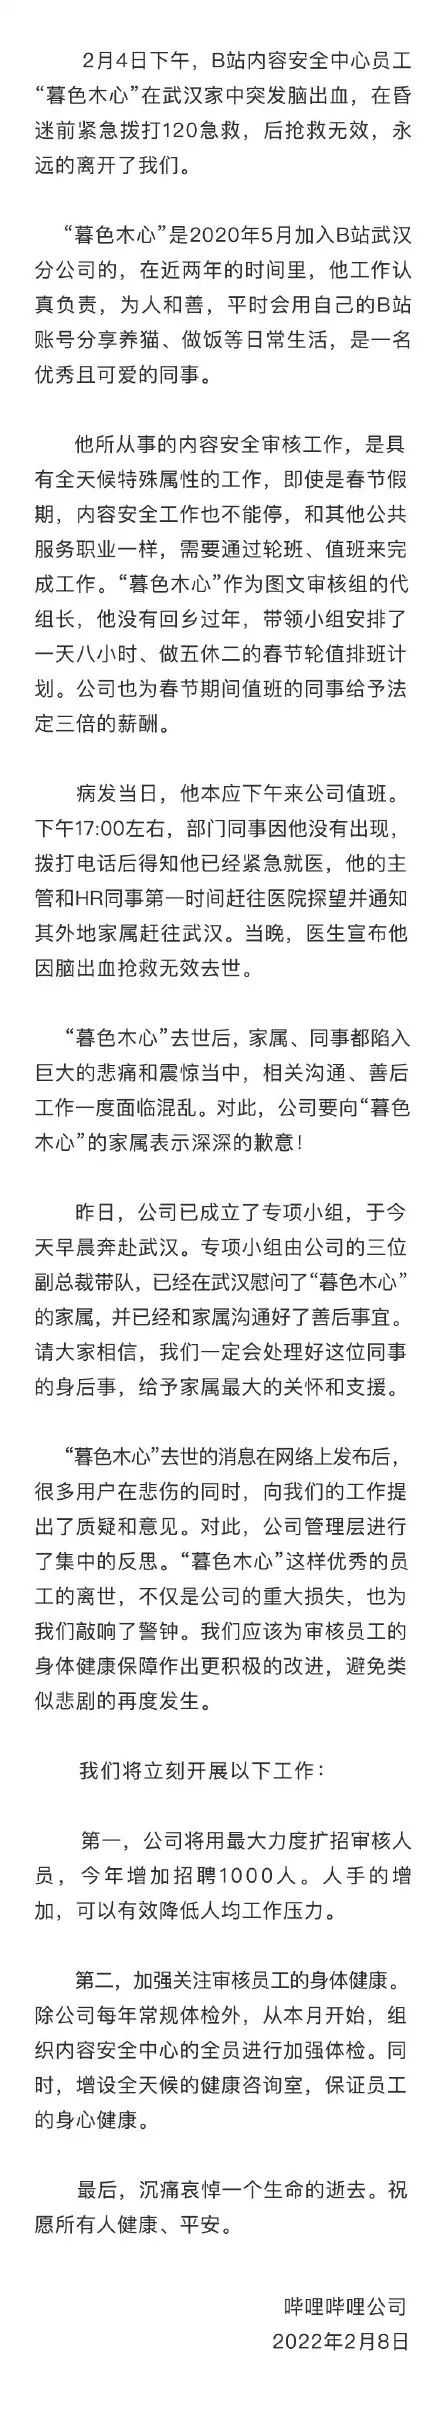 <a href='https://www.zhouxiaohui.cn/duanshipin/
' target='_blank'>小红书</a>申请“小紫书”商标；B站再次回应员工猝死事件 | 新榜情报-第4张图片-周小辉博客